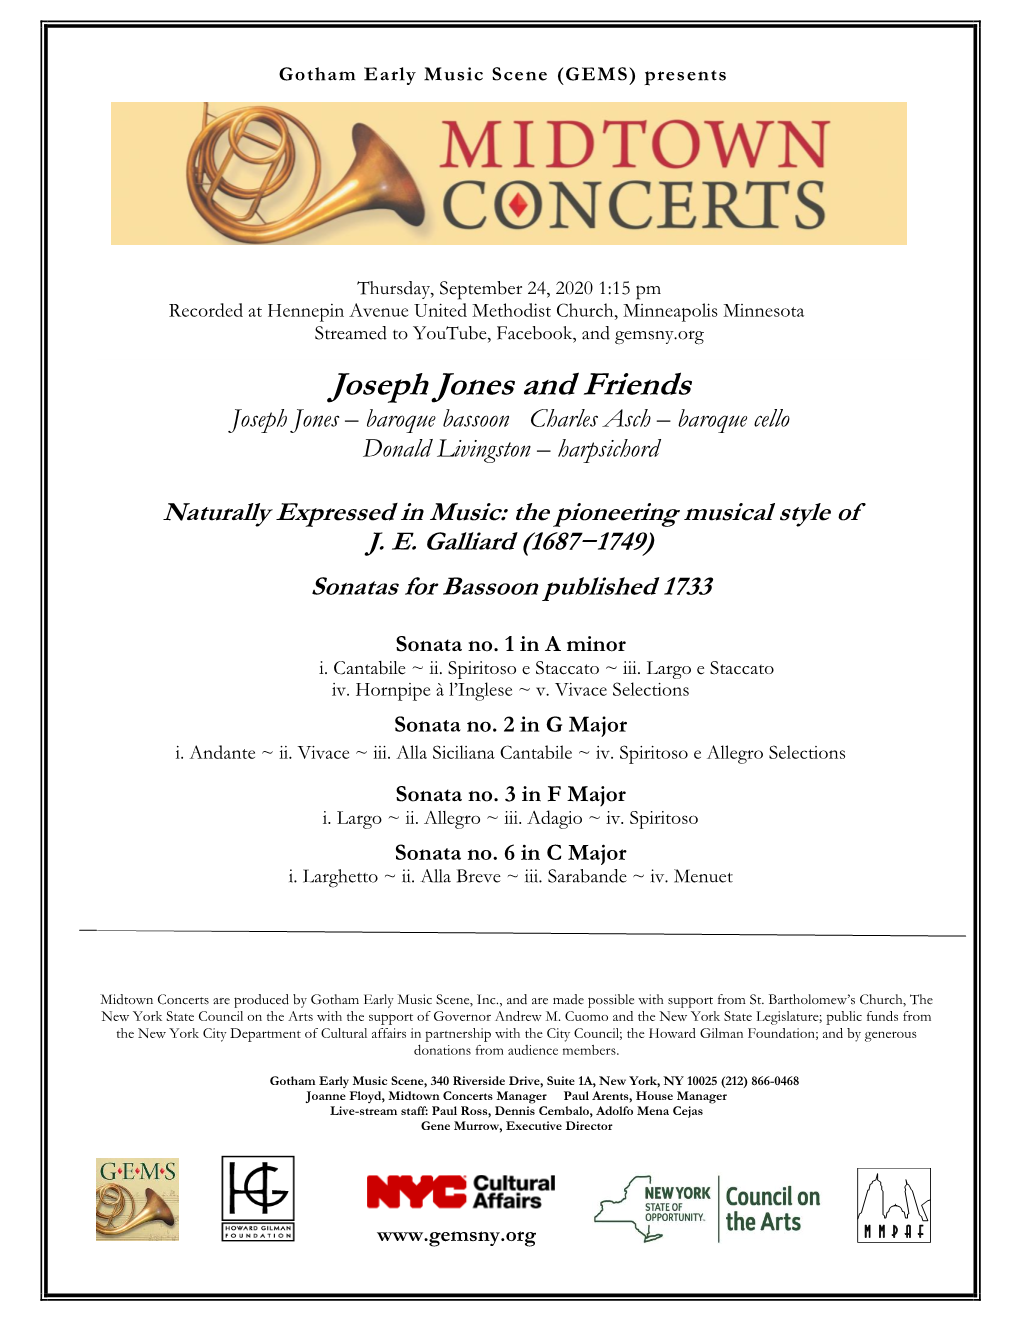 Joseph Jones and Friends Joseph Jones – Baroque Bassoon Charles Asch – Baroque Cello Donald Livingston – Harpsichord